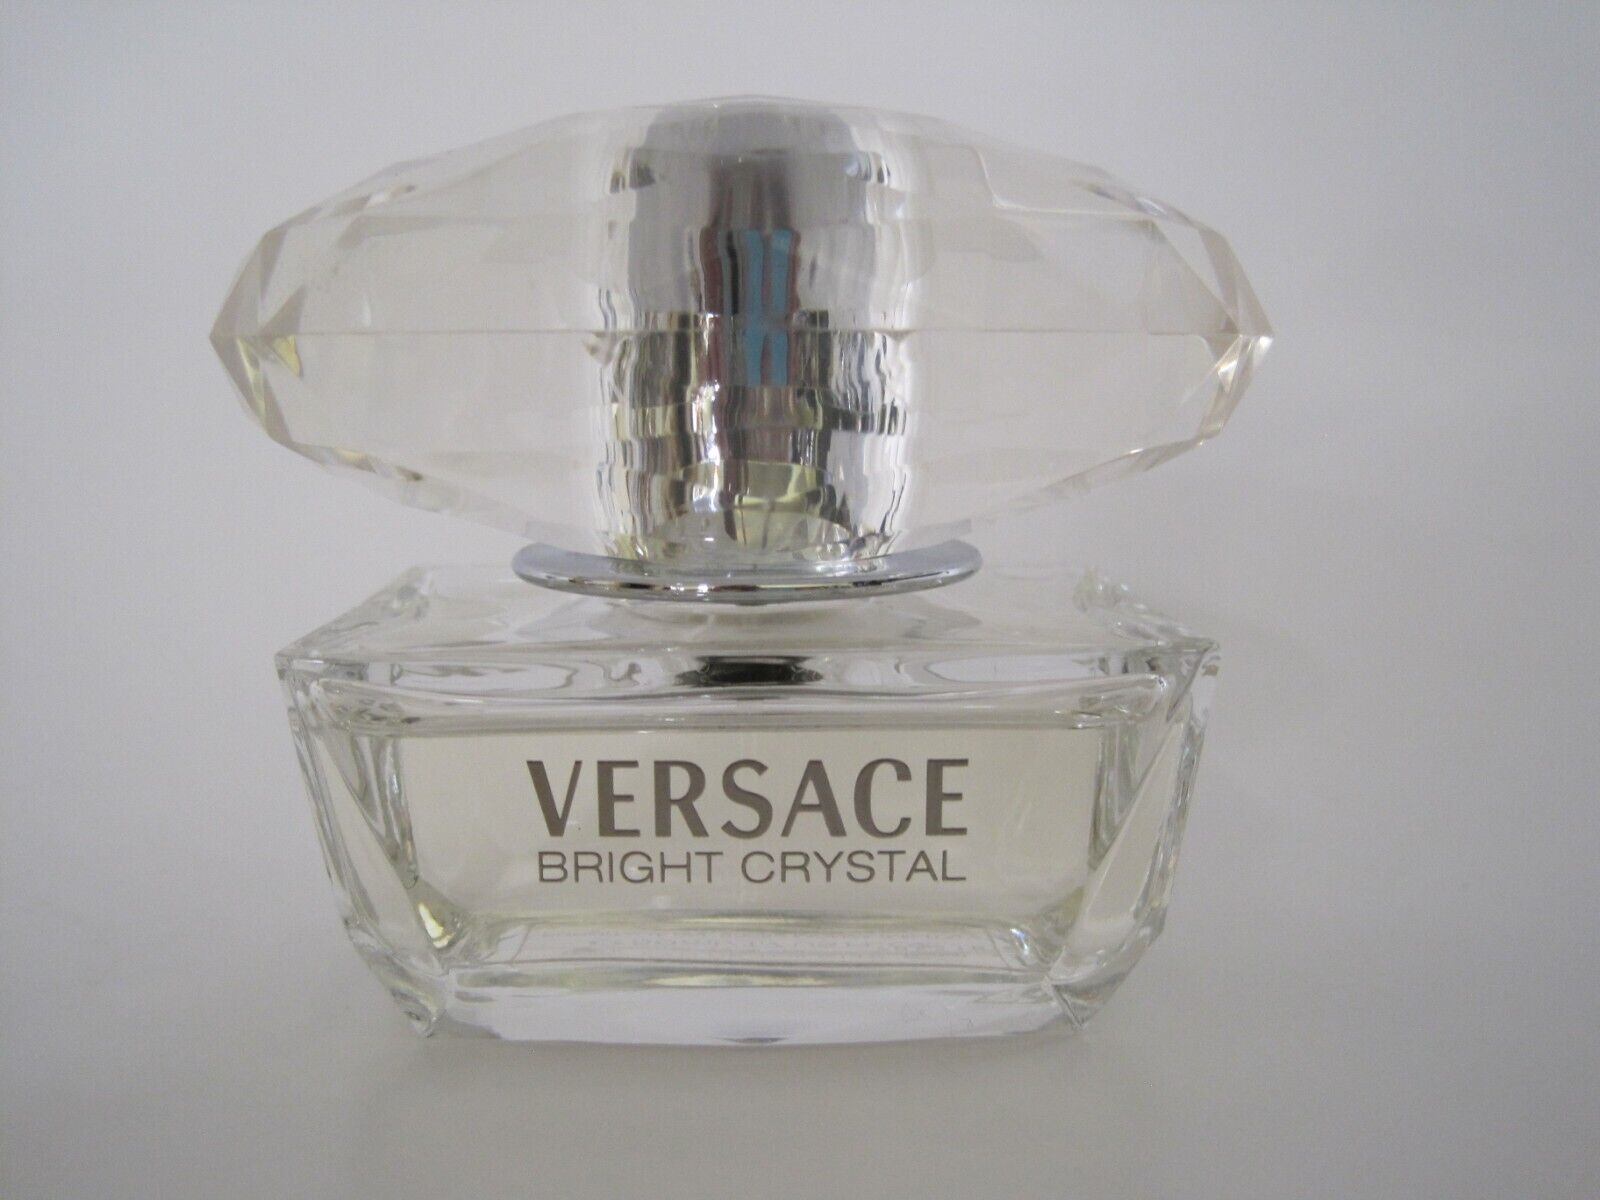 Versace Bright Crystal Eau de Toilette 1.7oz Near Full